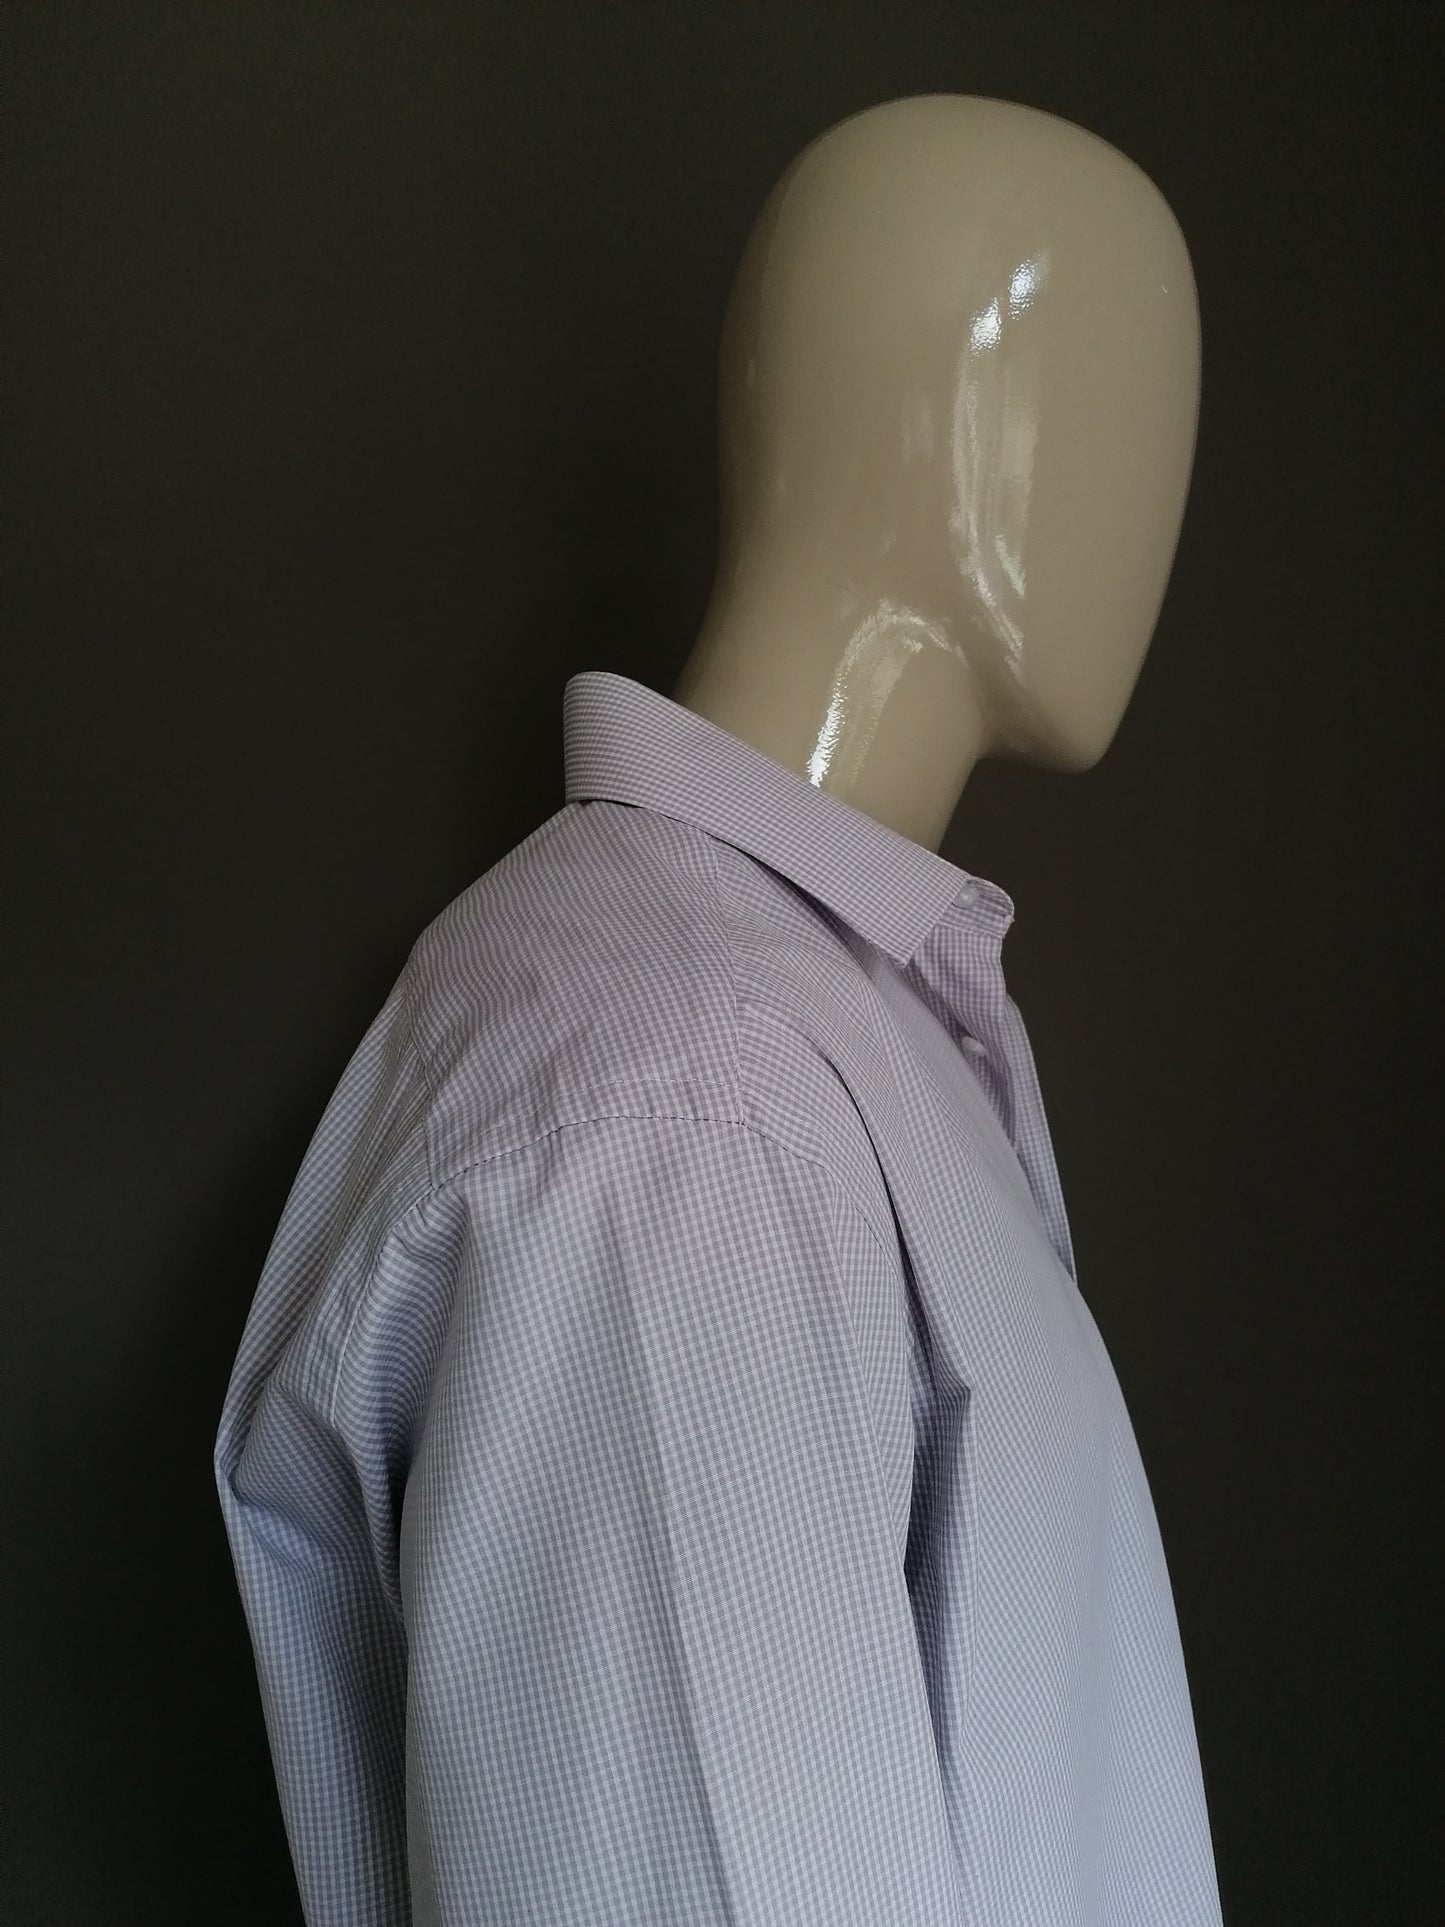 Taylor & Wright shirt. Gray white motif. Size XL / XXL. Regular fit. Falls large